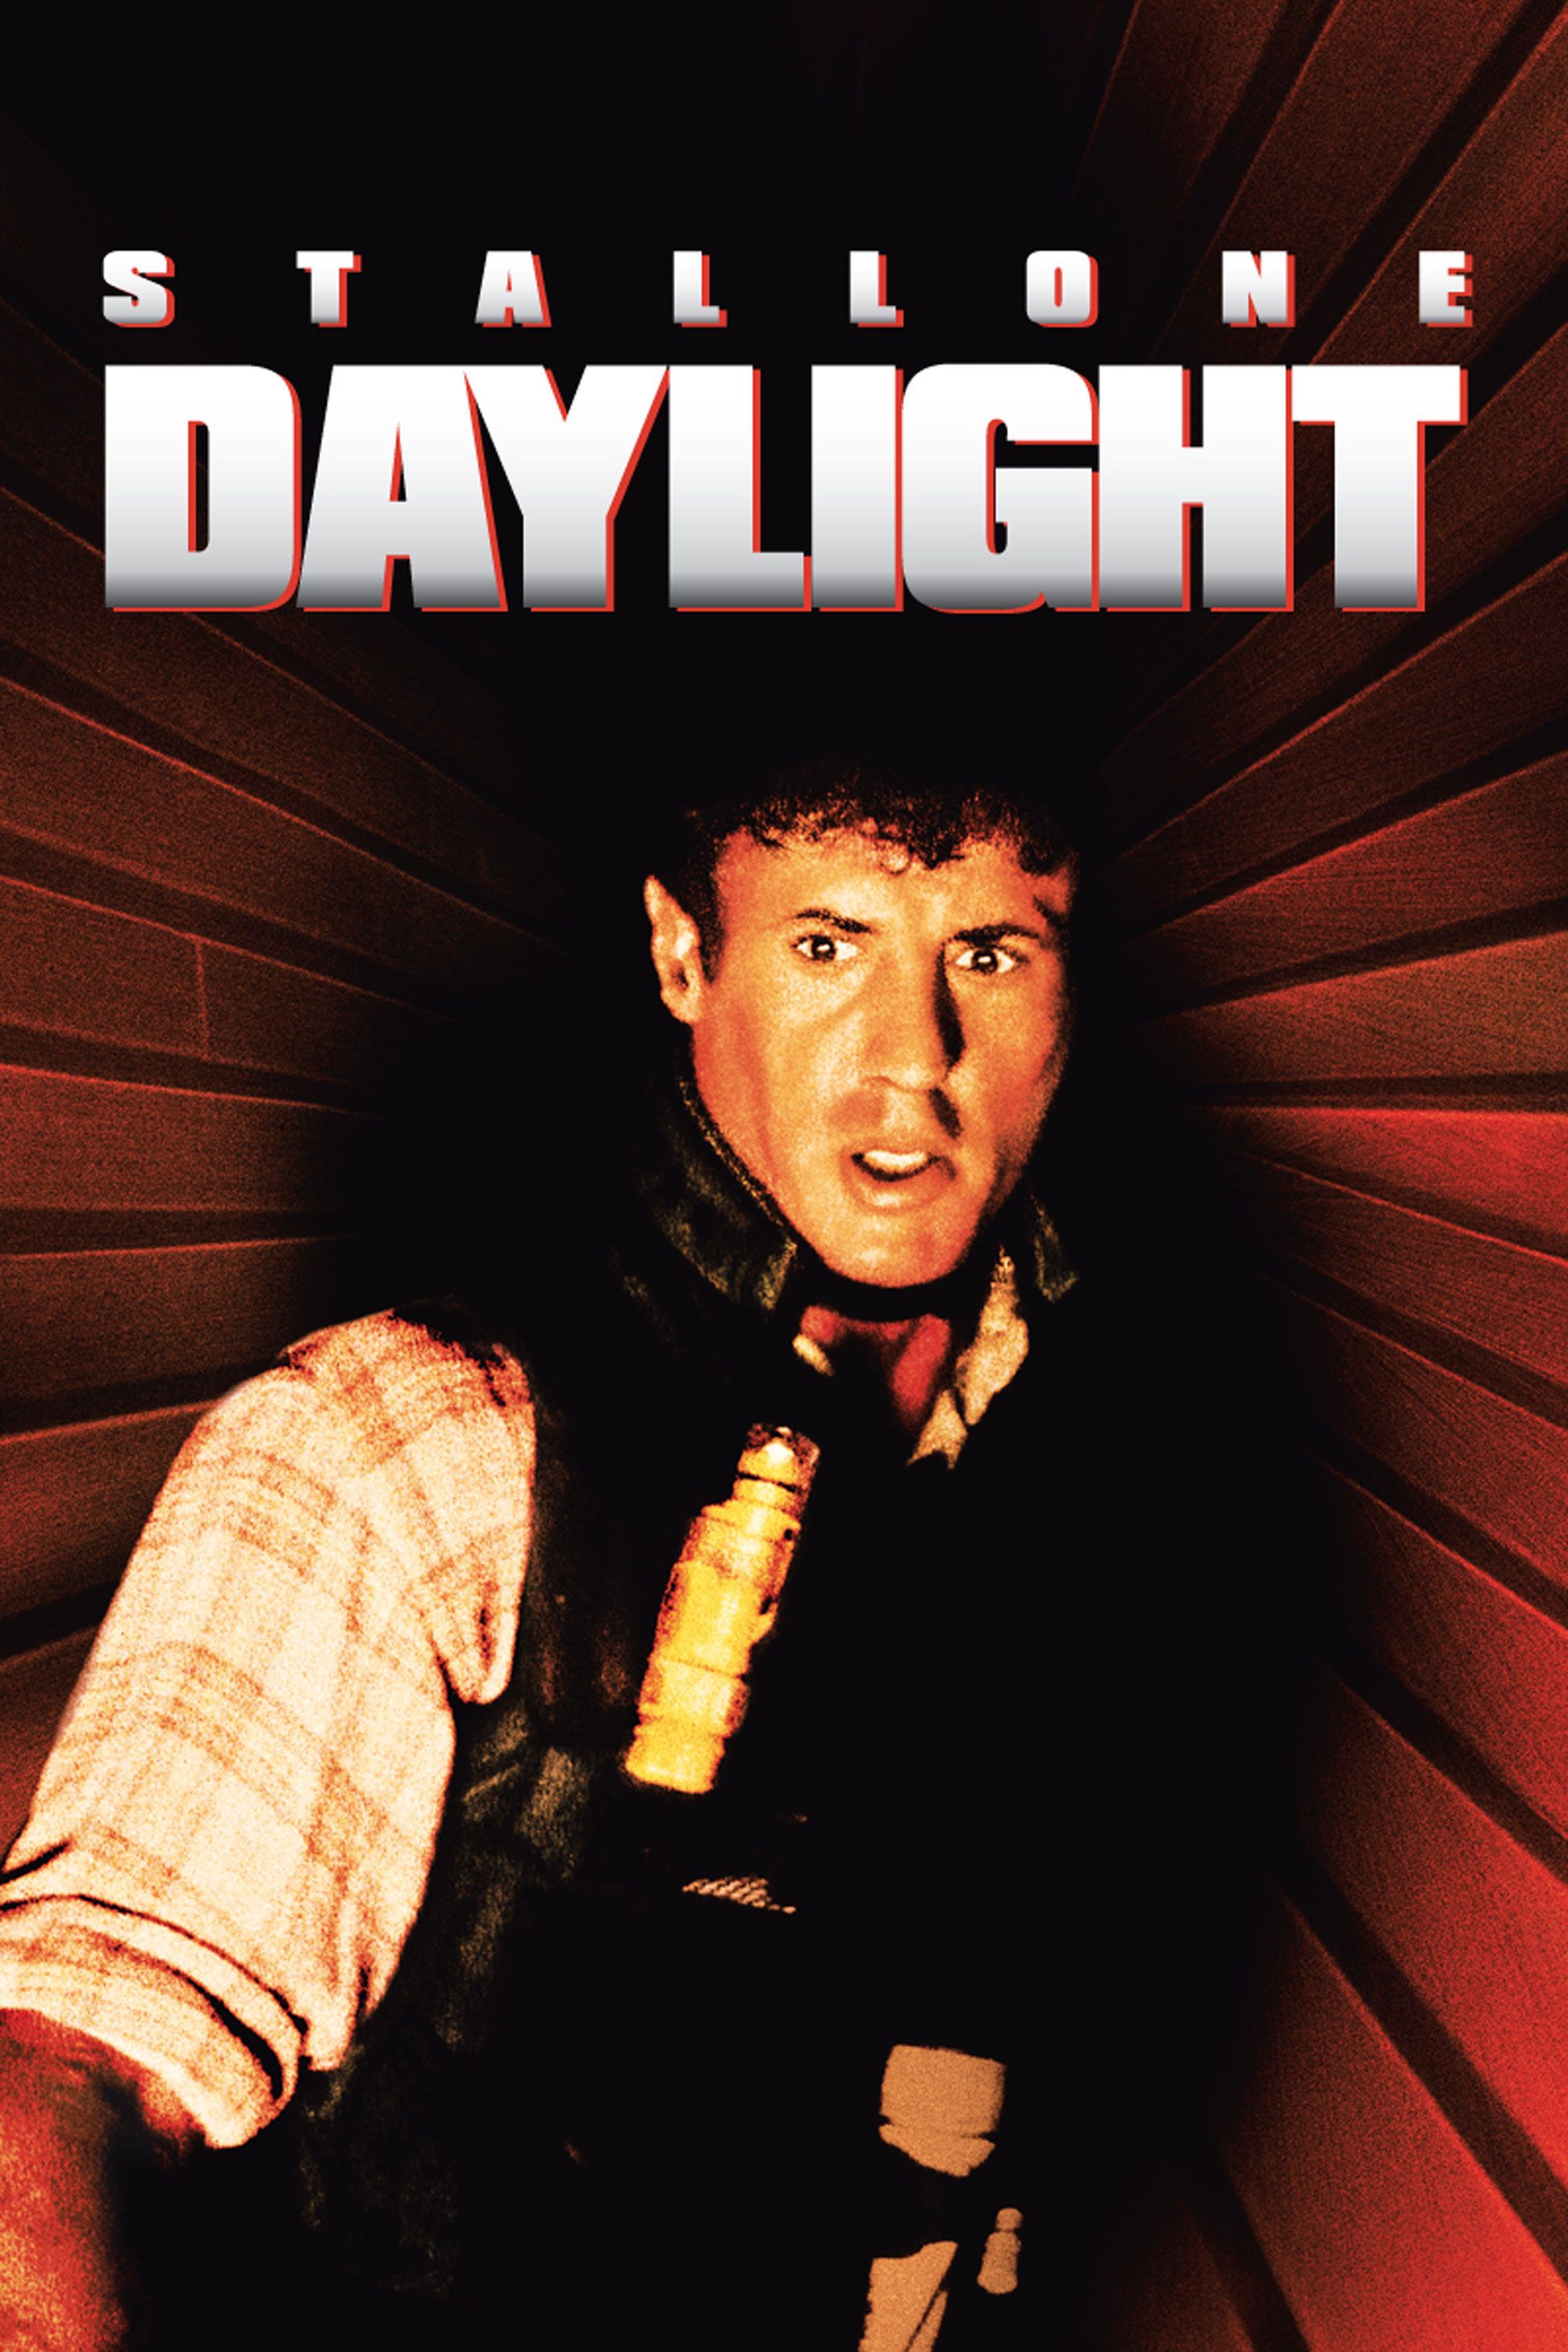 daylight movie